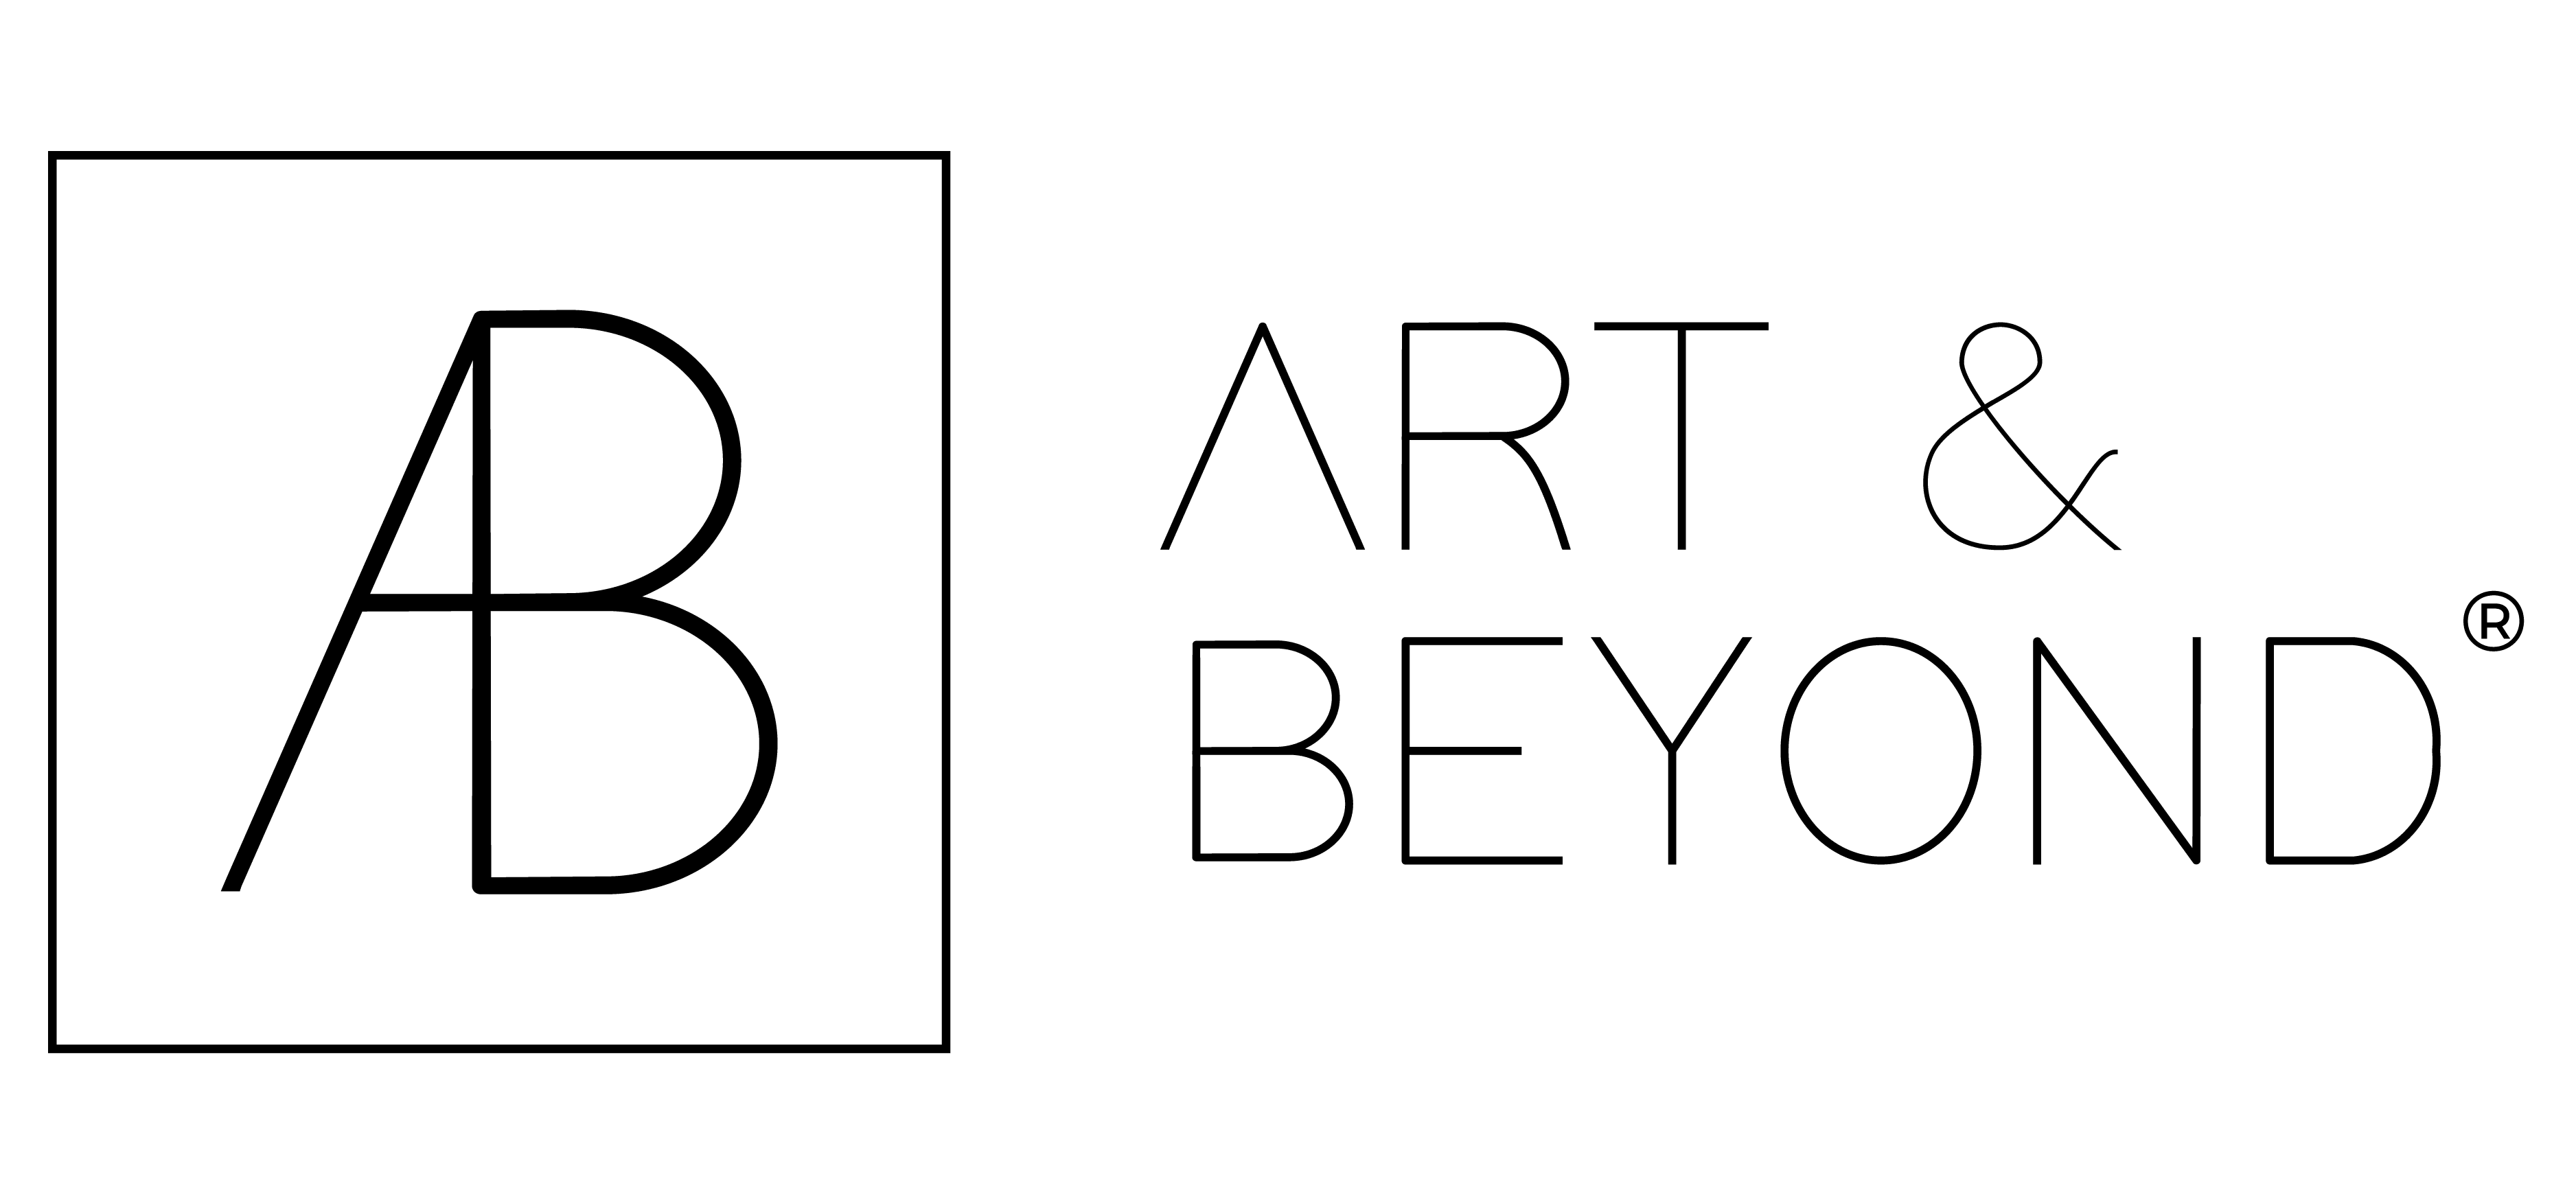 Art & Beyond® | Contemporary Art Gallery company logo